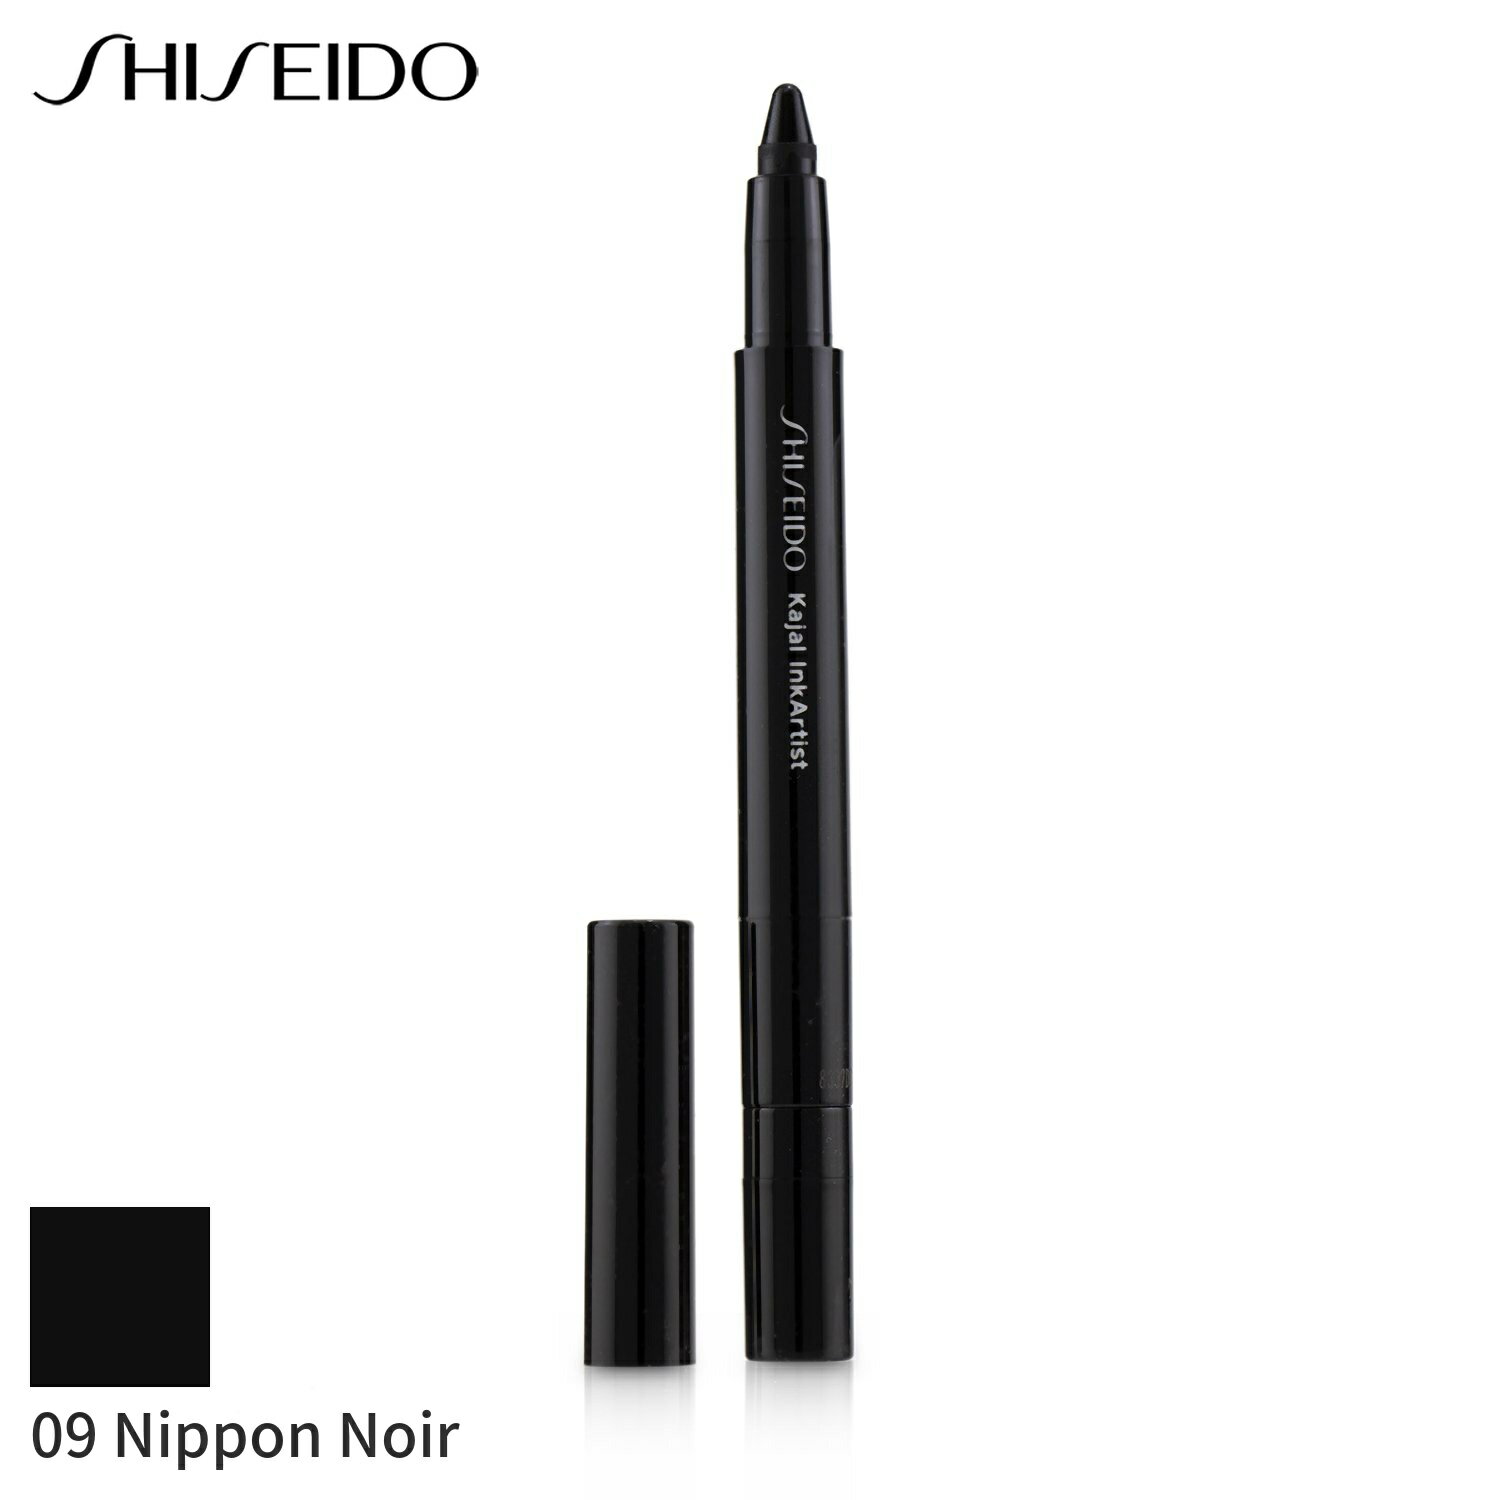  ACCi[ Shiseido JW[ CNA[eBXg (Vh[, Ci[, uE) - # 09 Nippon Noir (Black) 0.8g CNAbv AC ̓ v[g Mtg 2024 lC uh RX